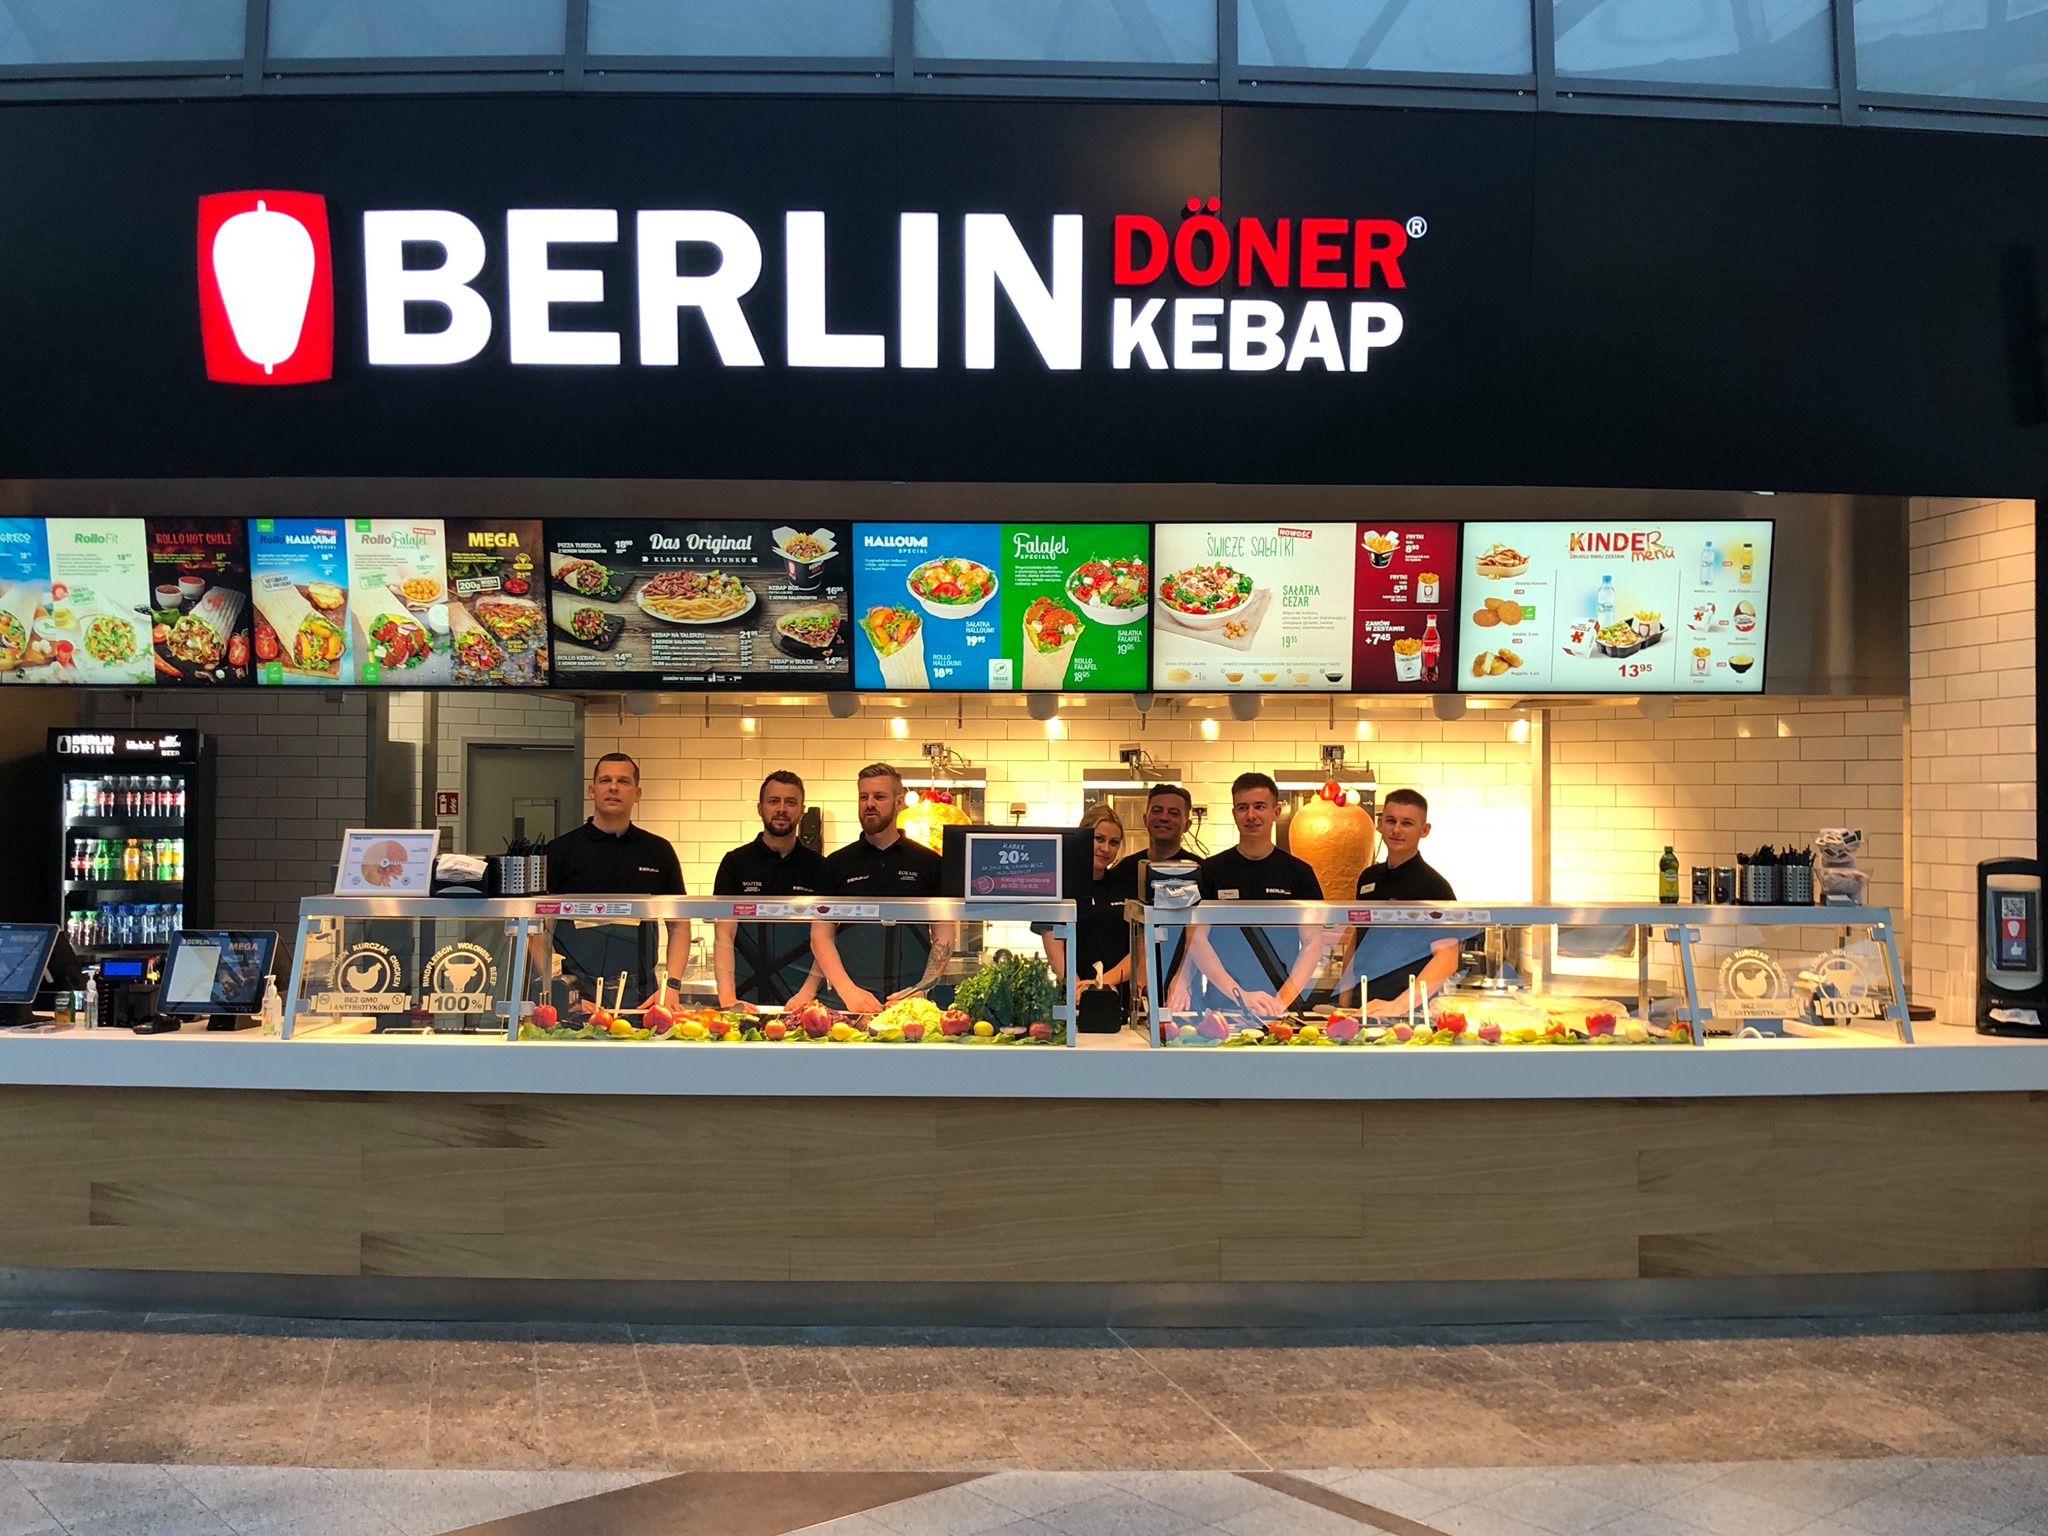 Berlin Döner Kebap ma już 50 lokali - Gastronomia